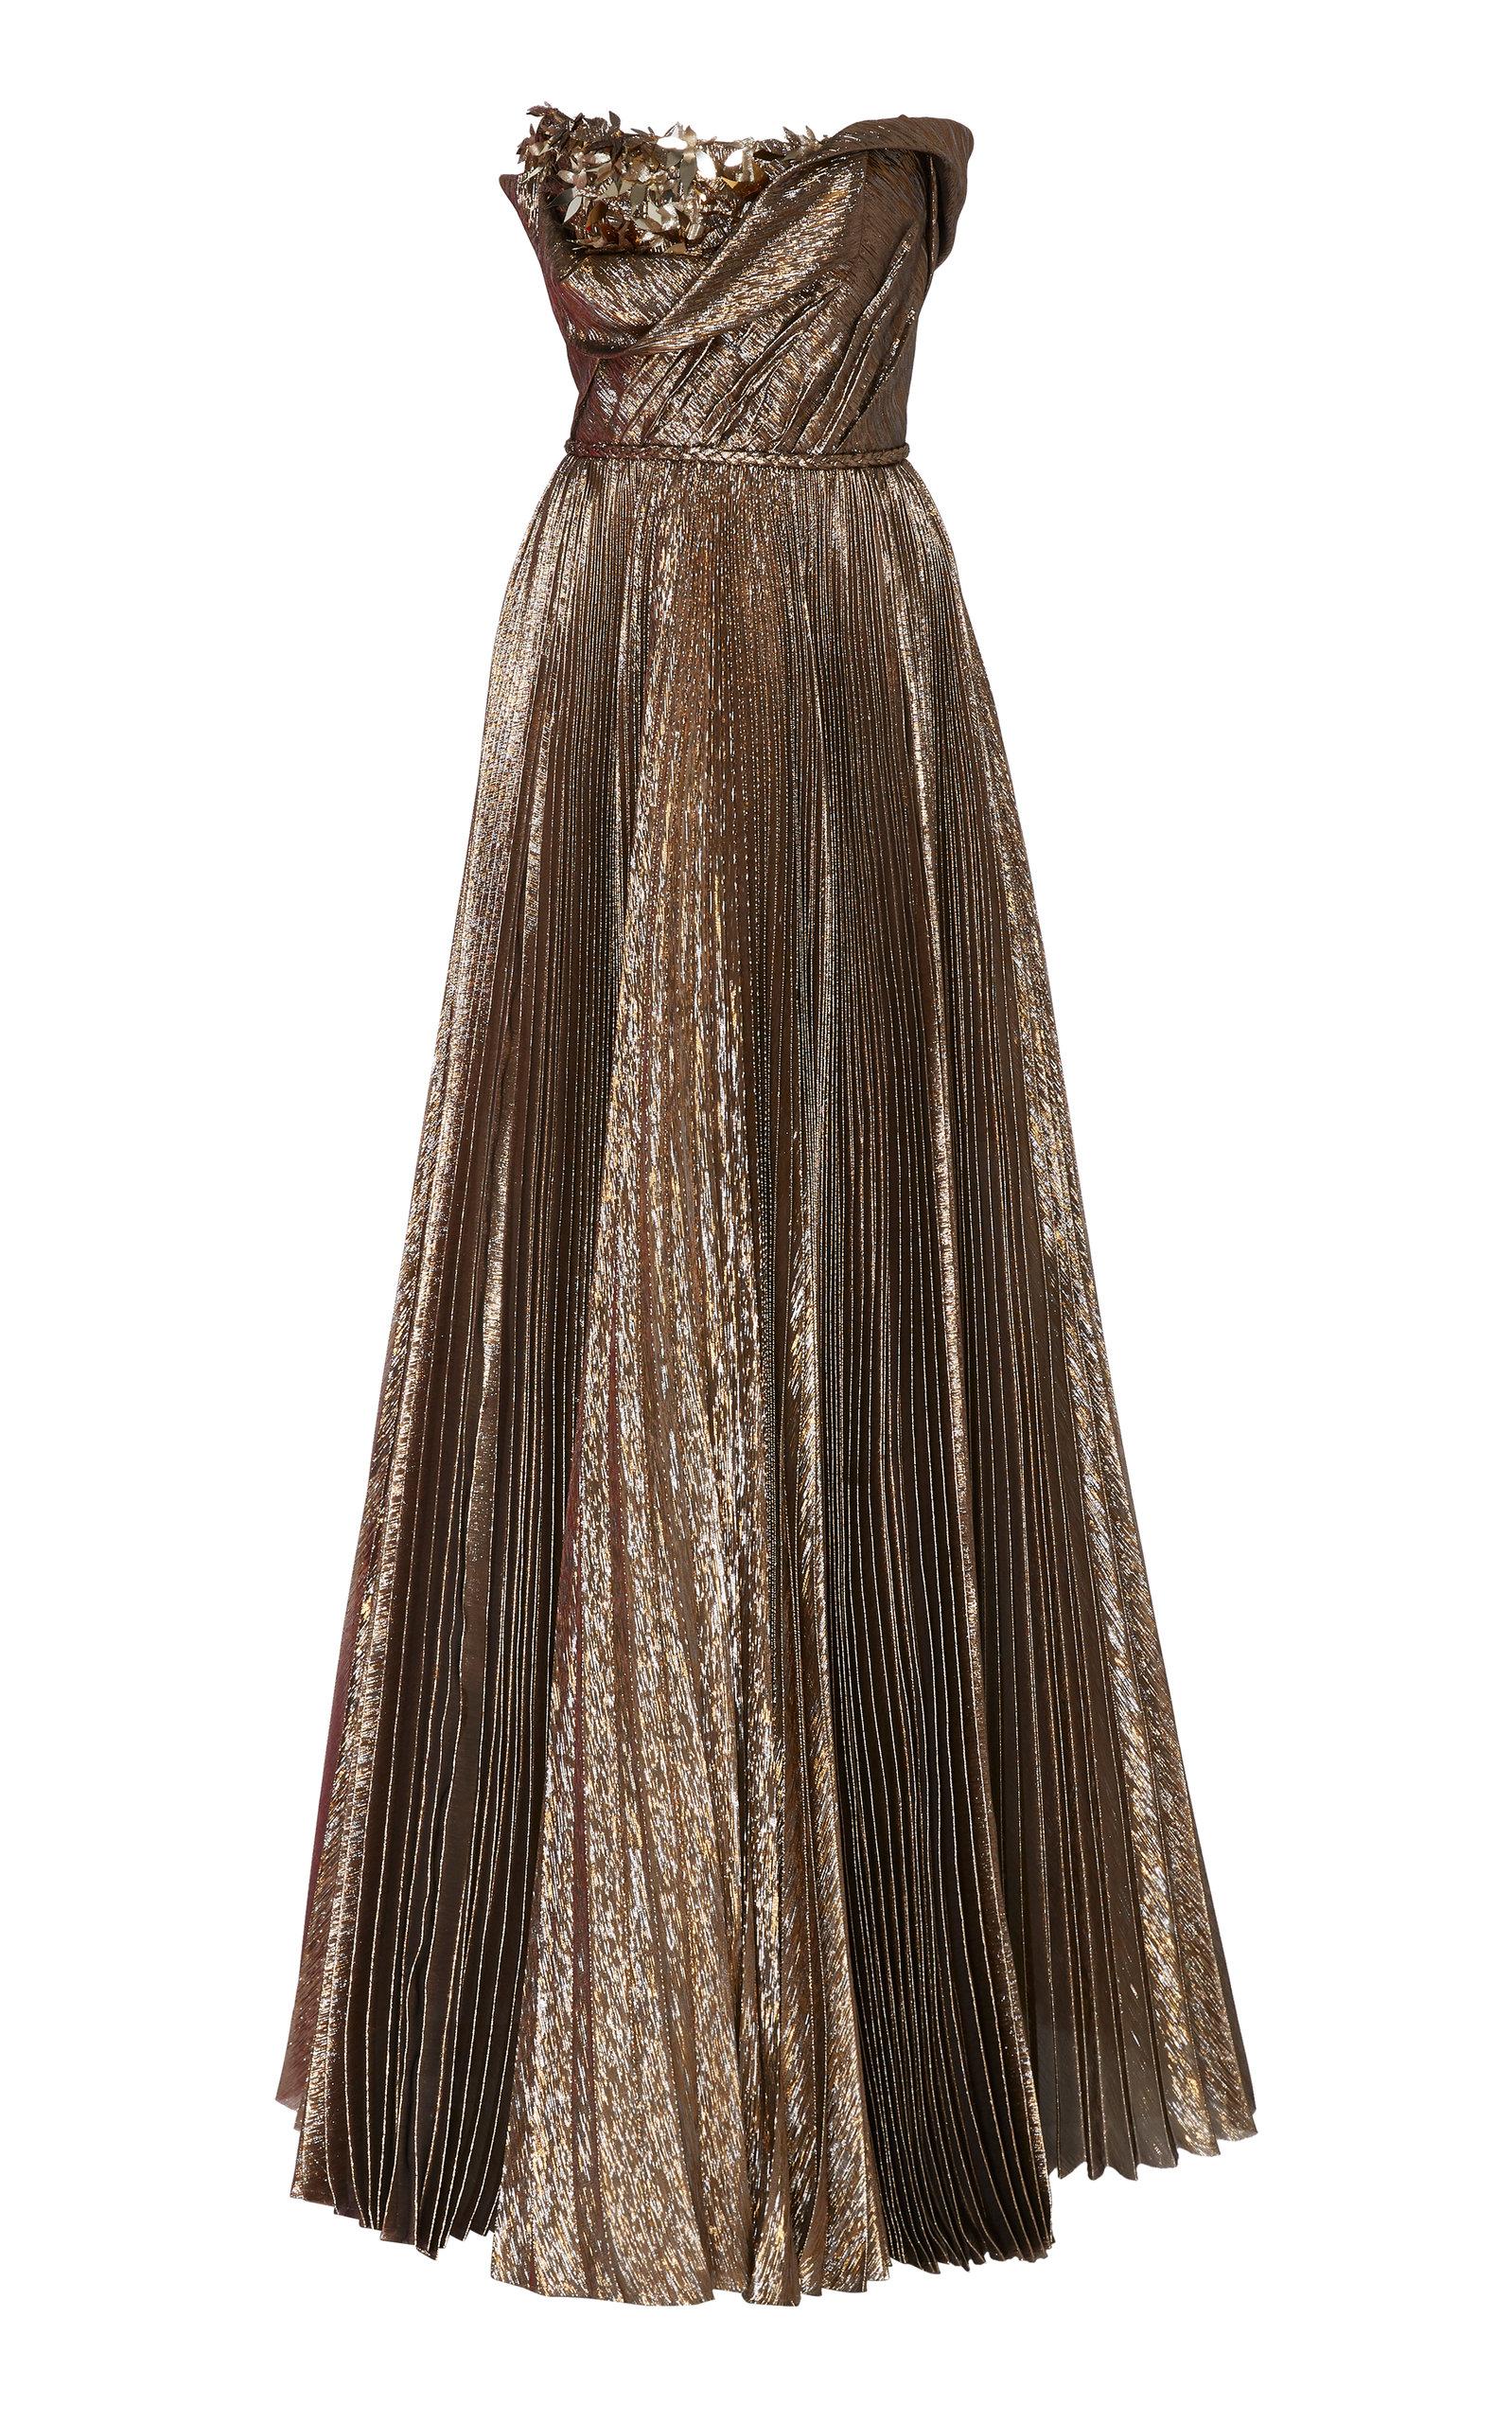 Oscar de la Renta Floral Embellished Strapless Gown in Metallic - Lyst